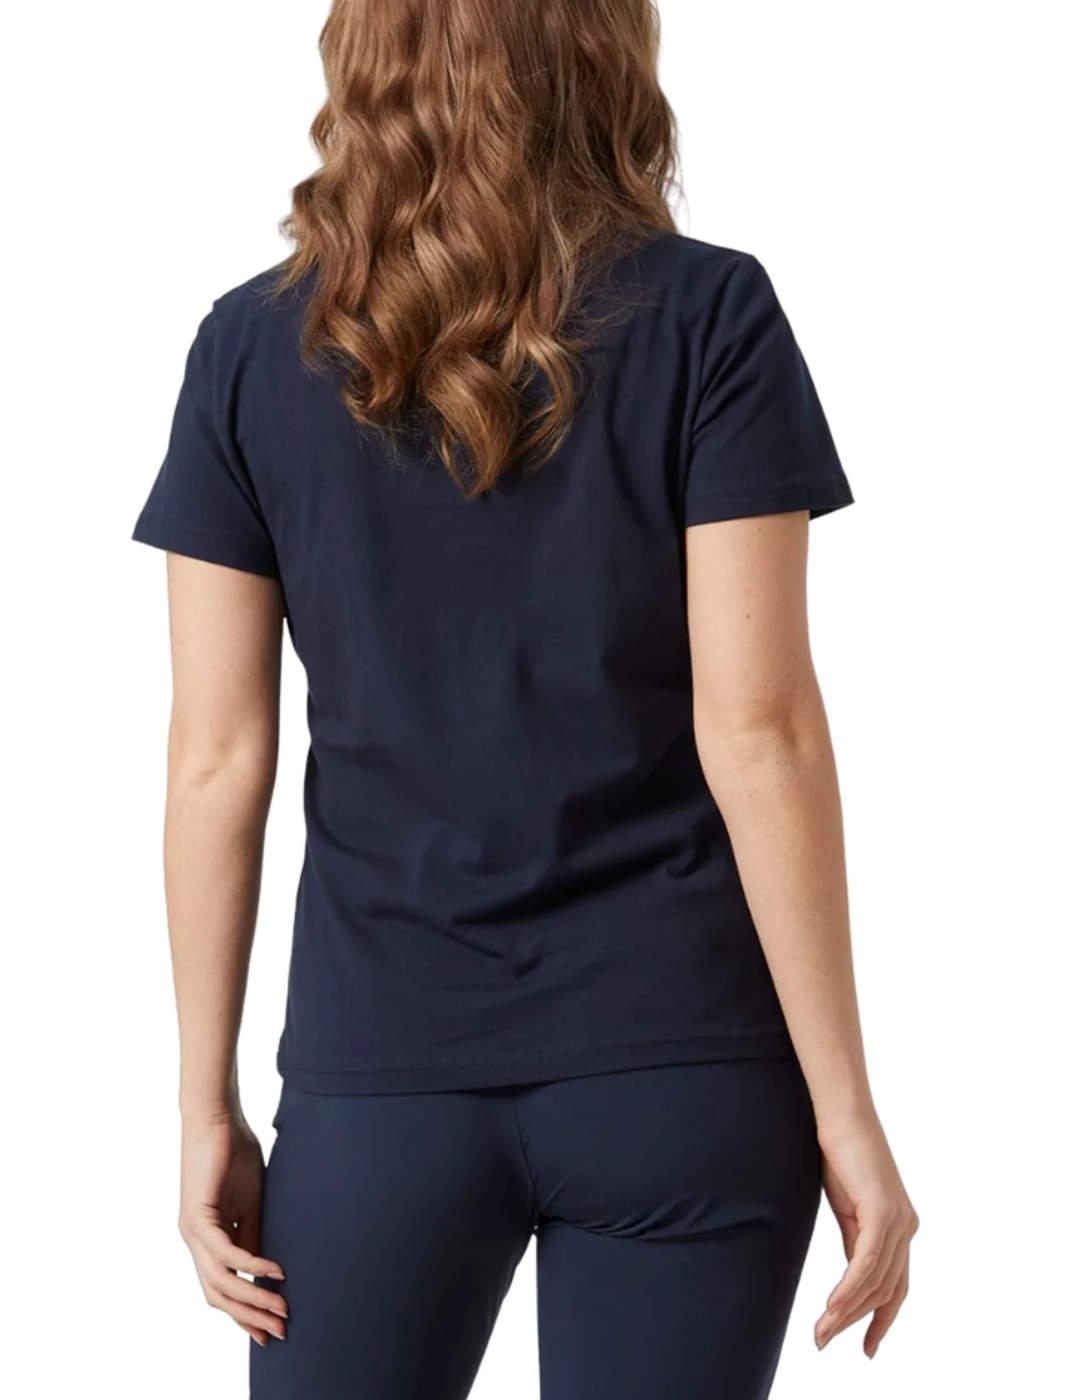 Camiseta Helly Hansen logo azul marino manga corta de mujer